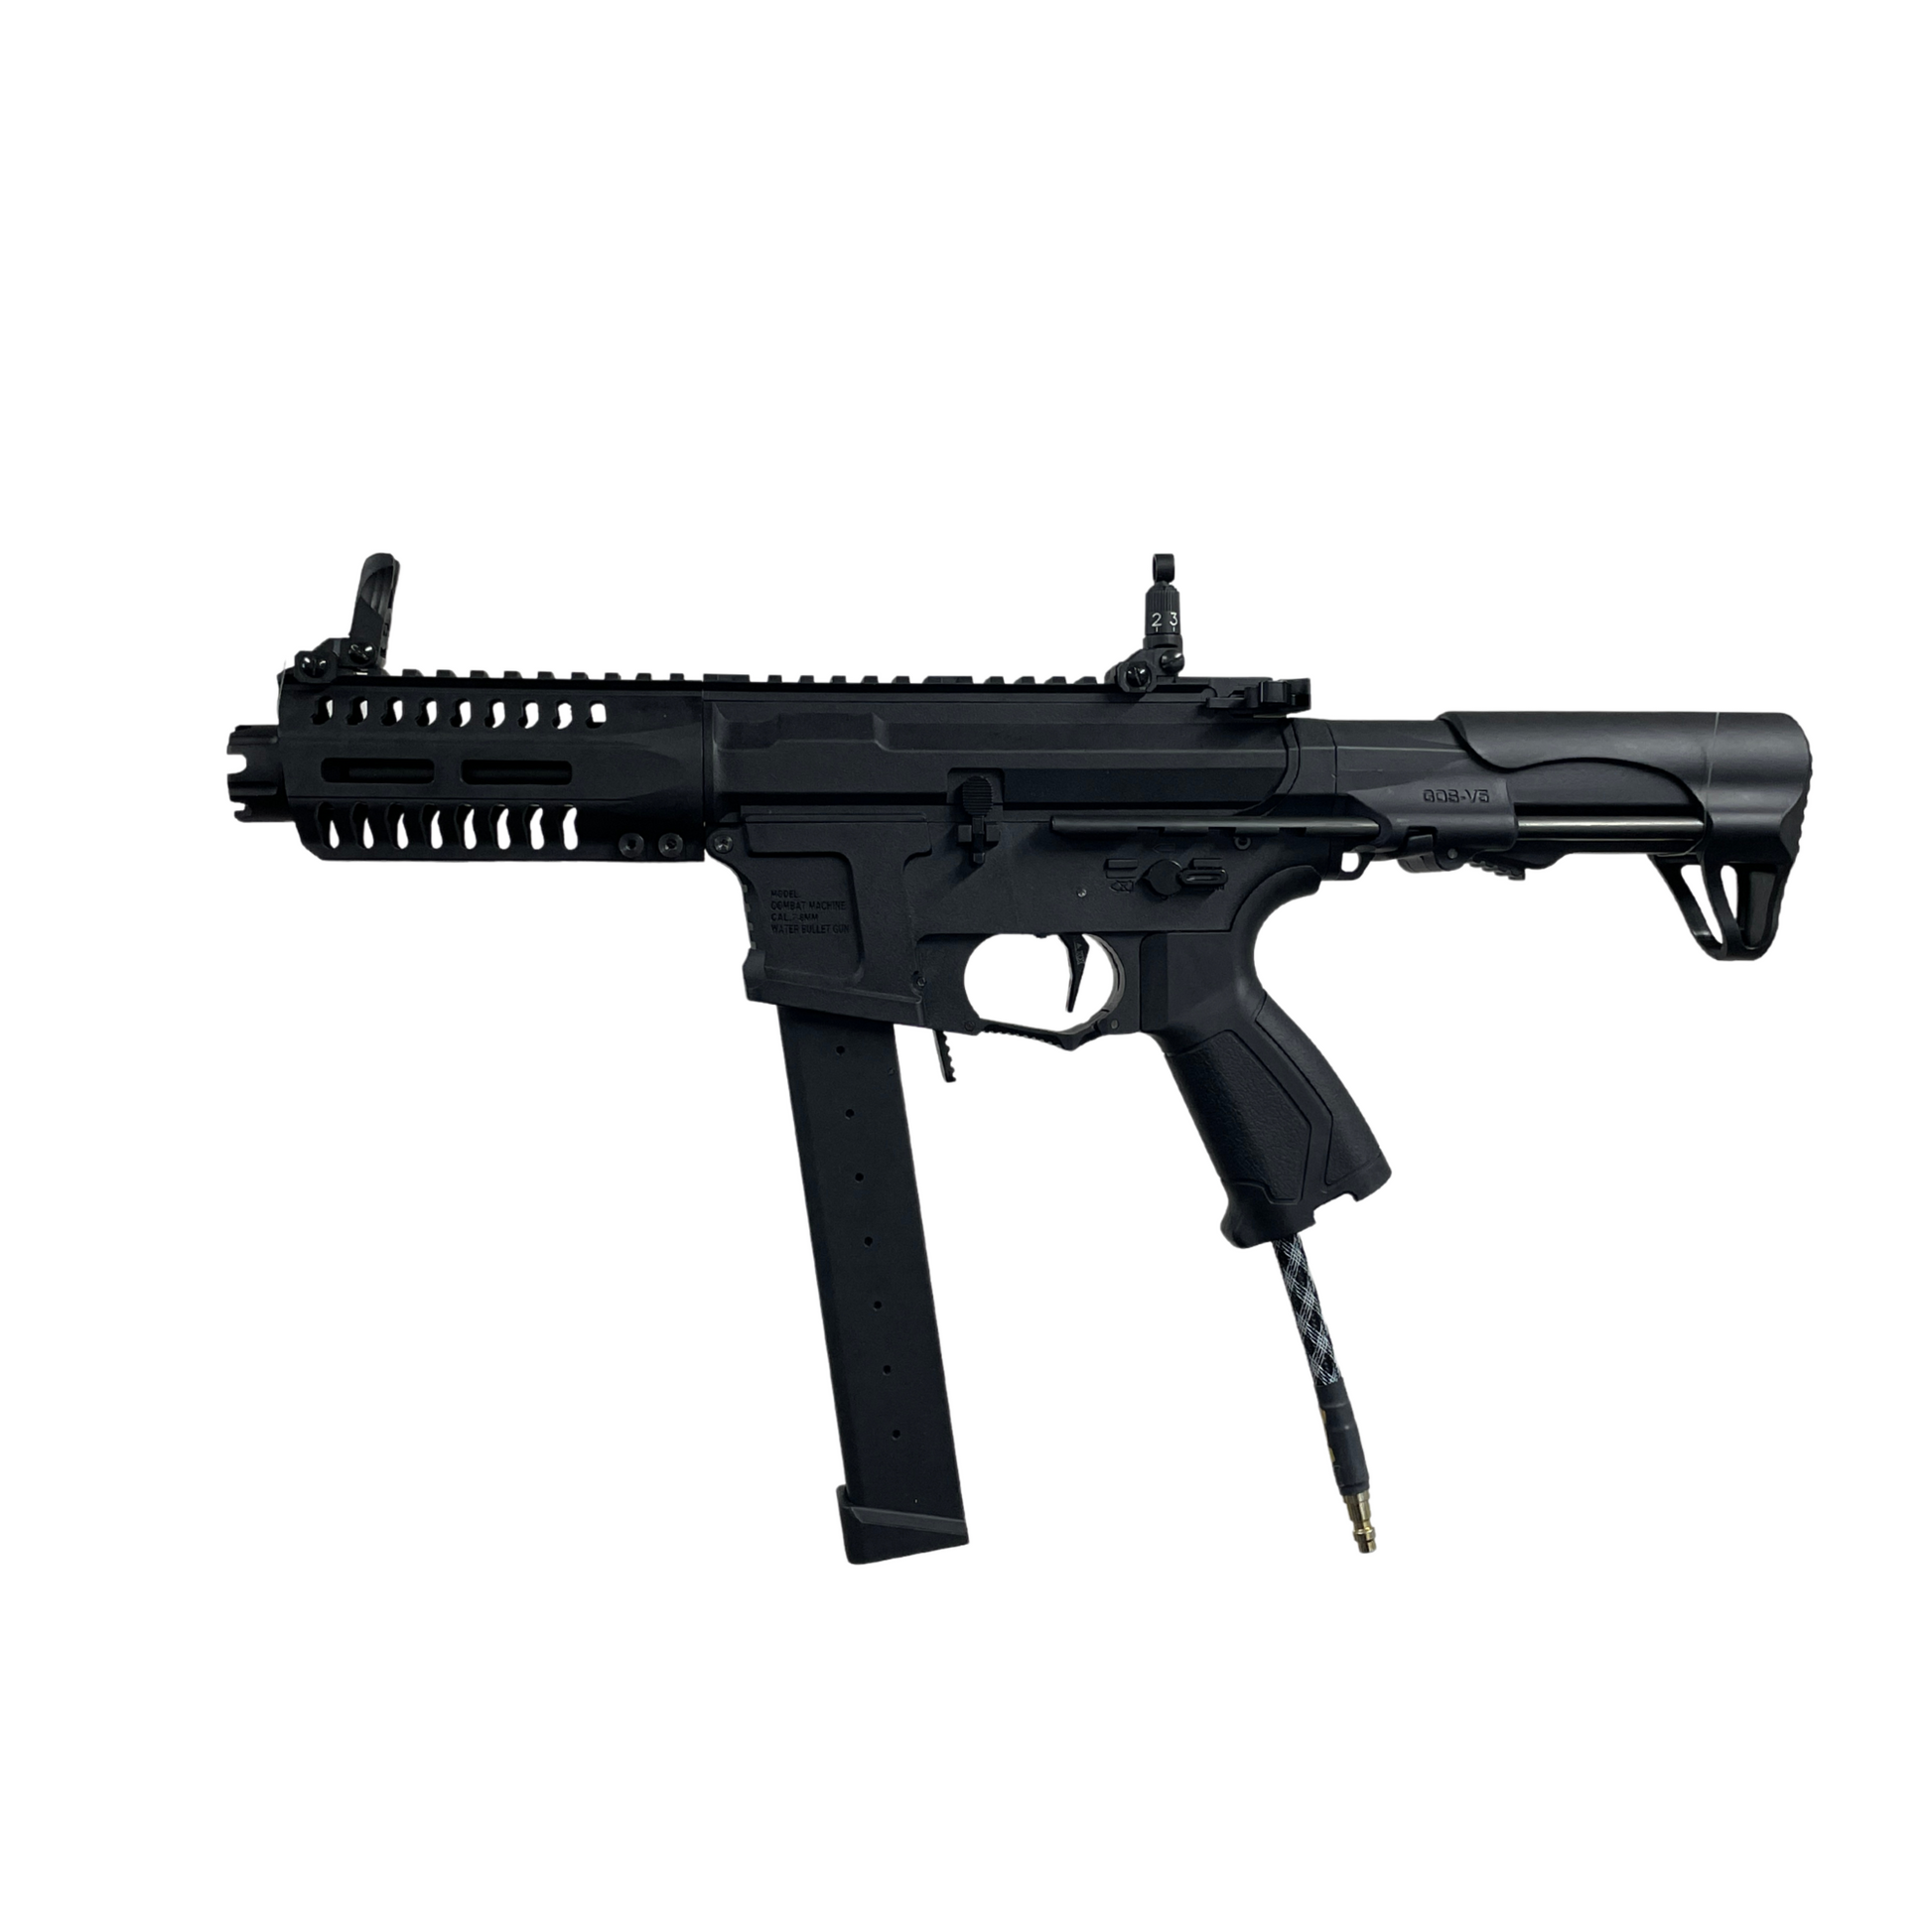 P90 ORBEEZ GUN - US STOCK – Gel Blaster Gun